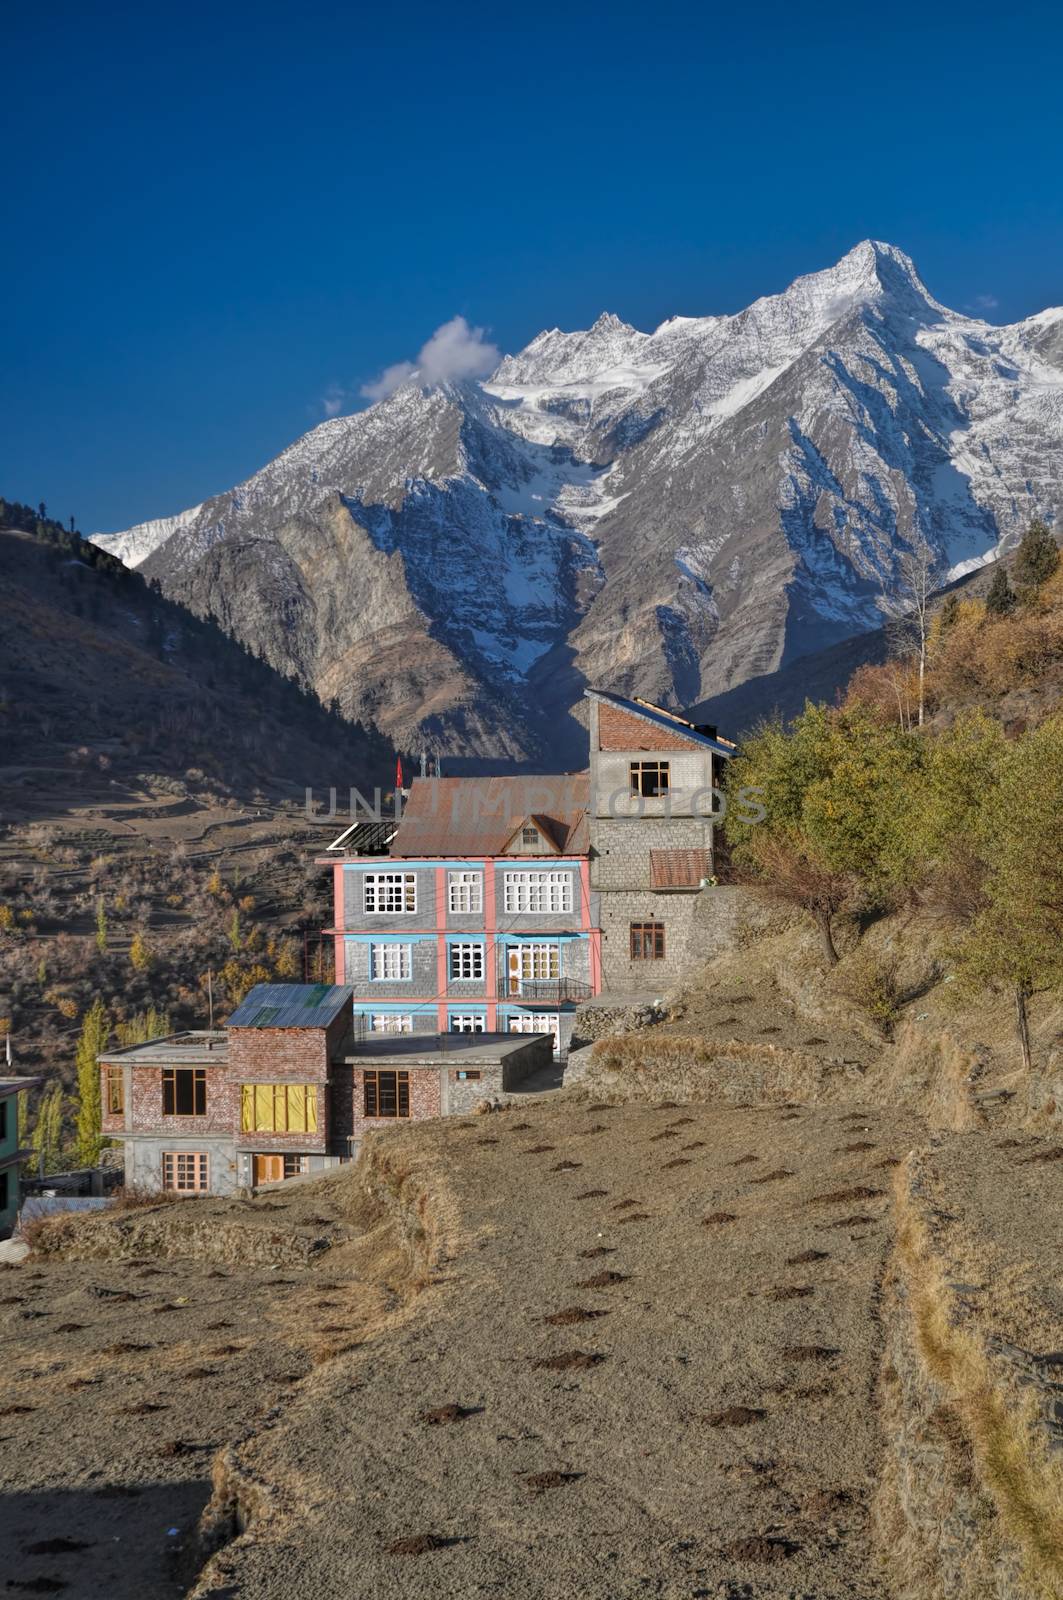 Keylog in Himachal Pradesh by MichalKnitl